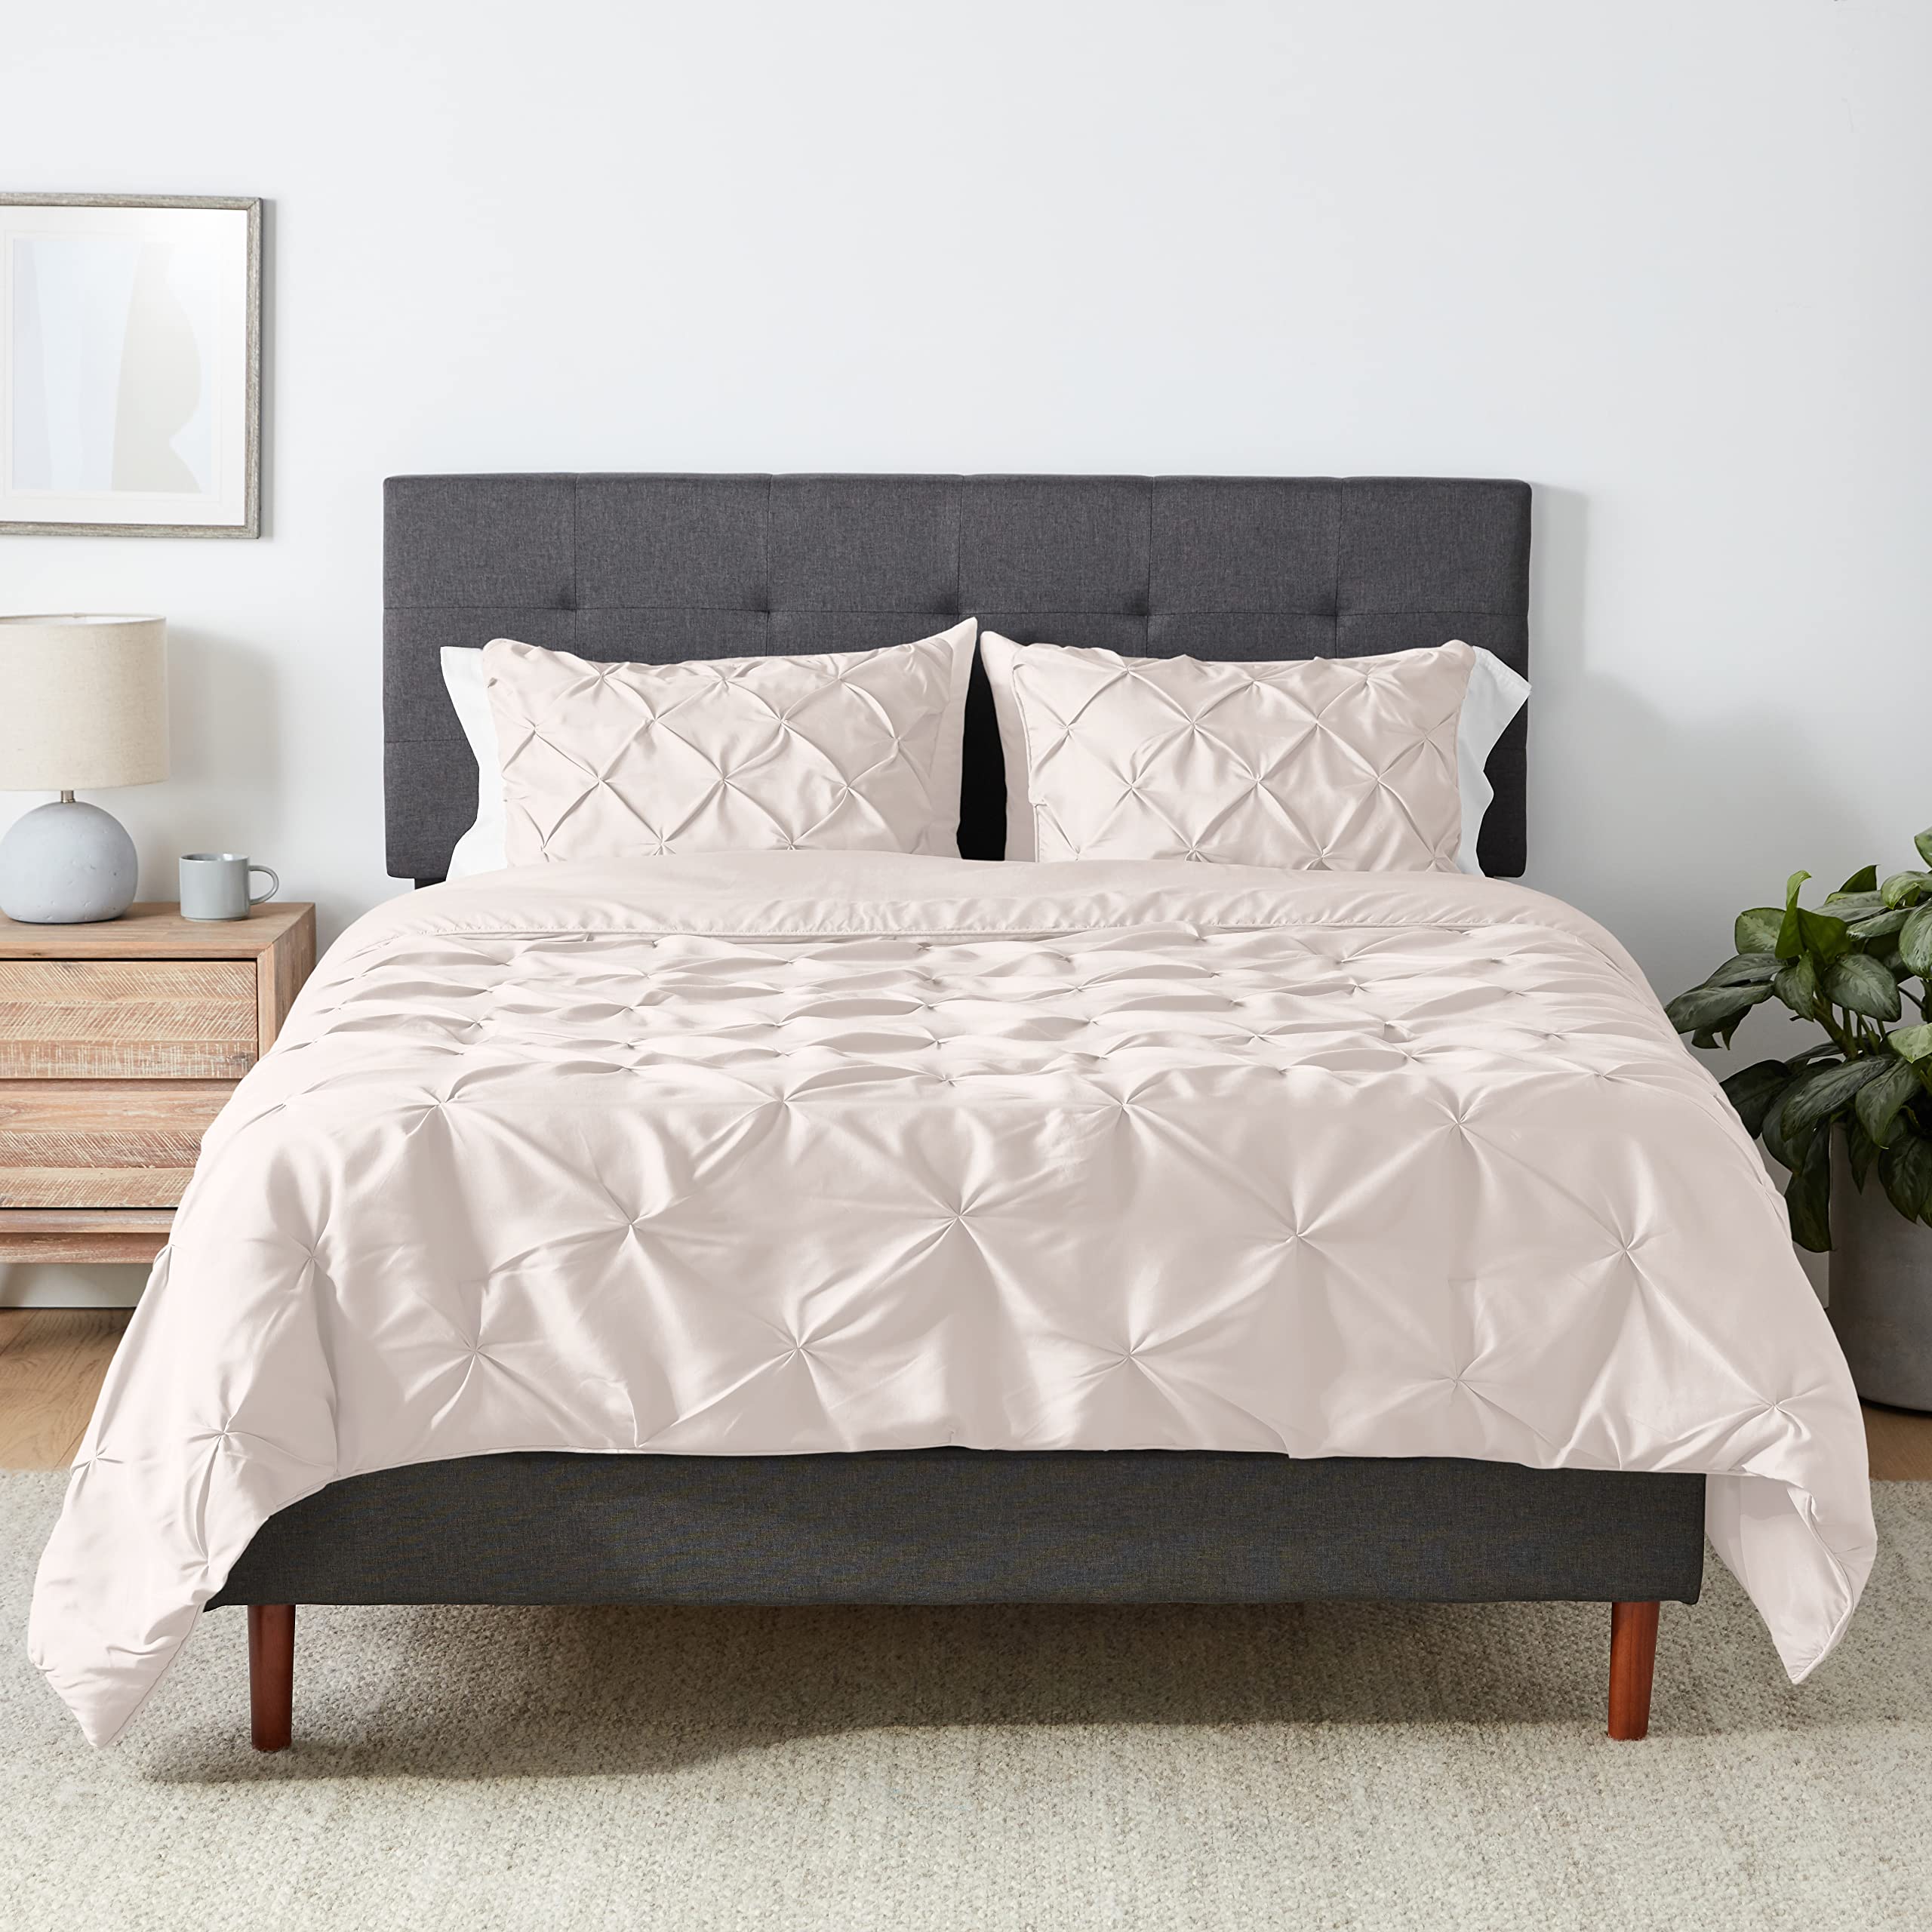 Book Cover Amazon Basics All-Season Down-Alternative 3 Piece Comforter Bedding Set, Full/Queen, Cream, Pinch Pleat With Piped Edges Cream Full/Queen